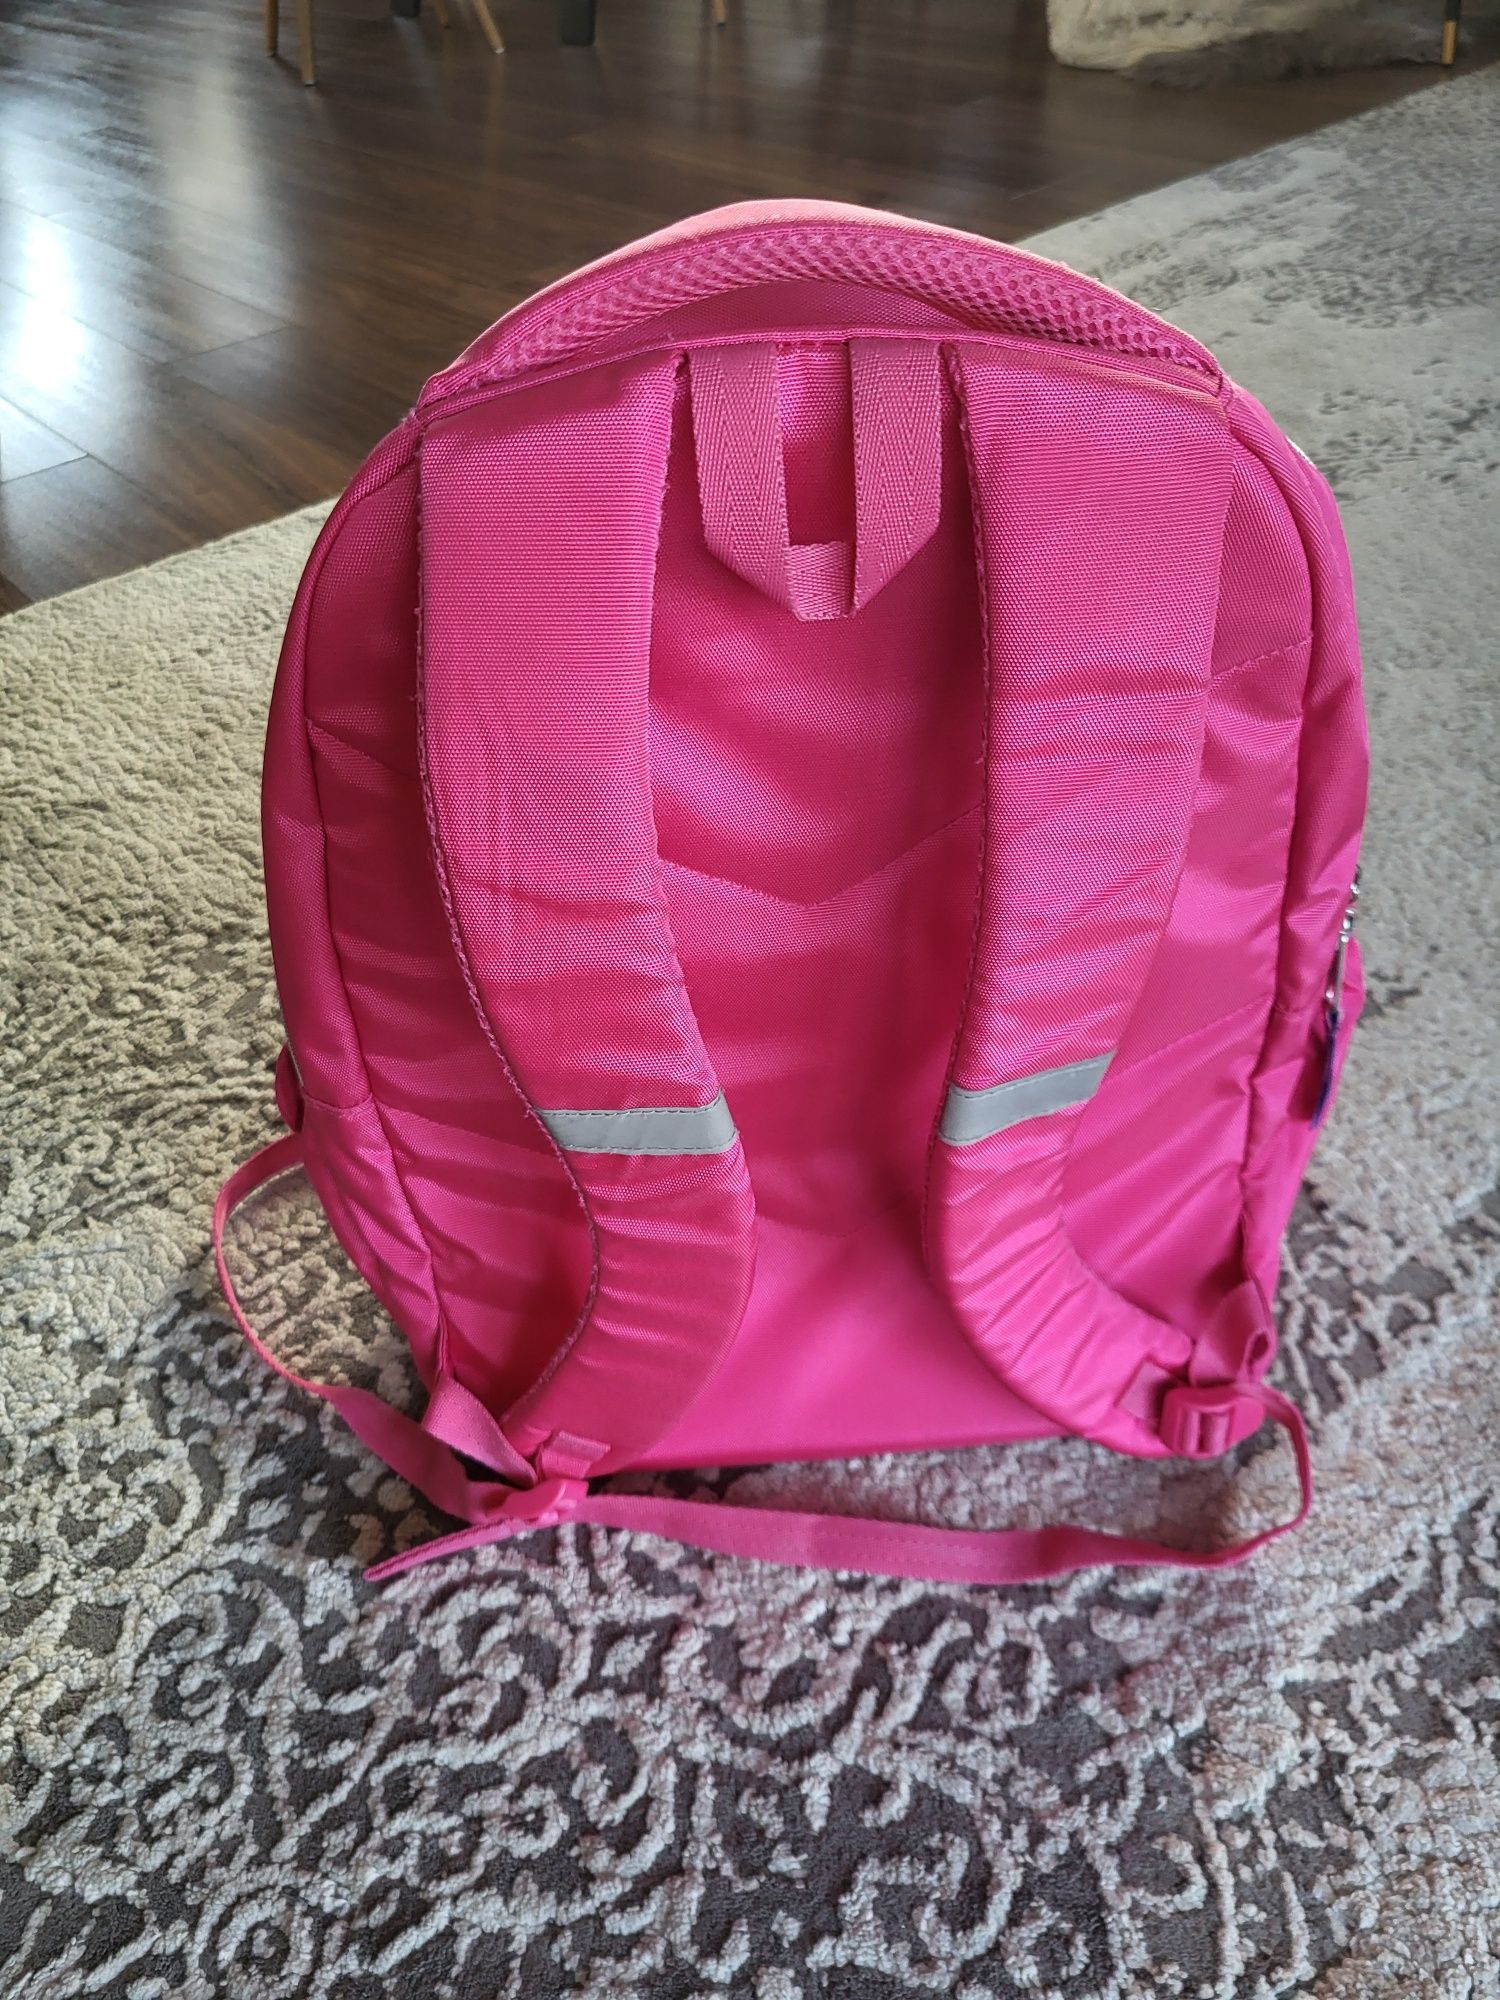 Plecak top model rożowy